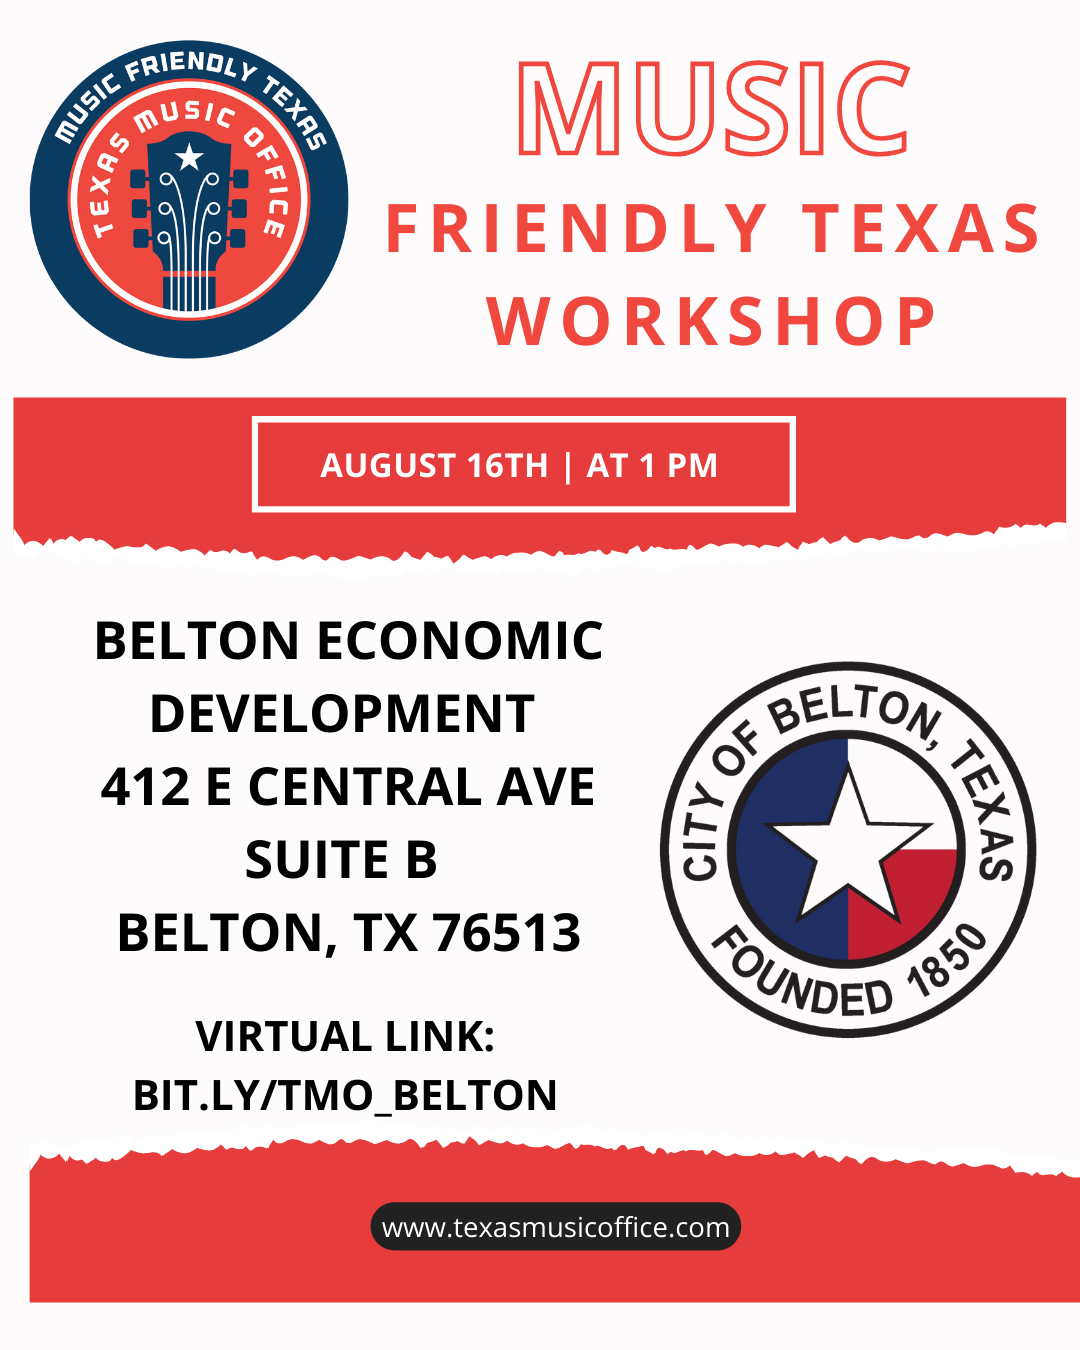 Governor Abbott Announces Belton Music Friendly Texas Community Workshop